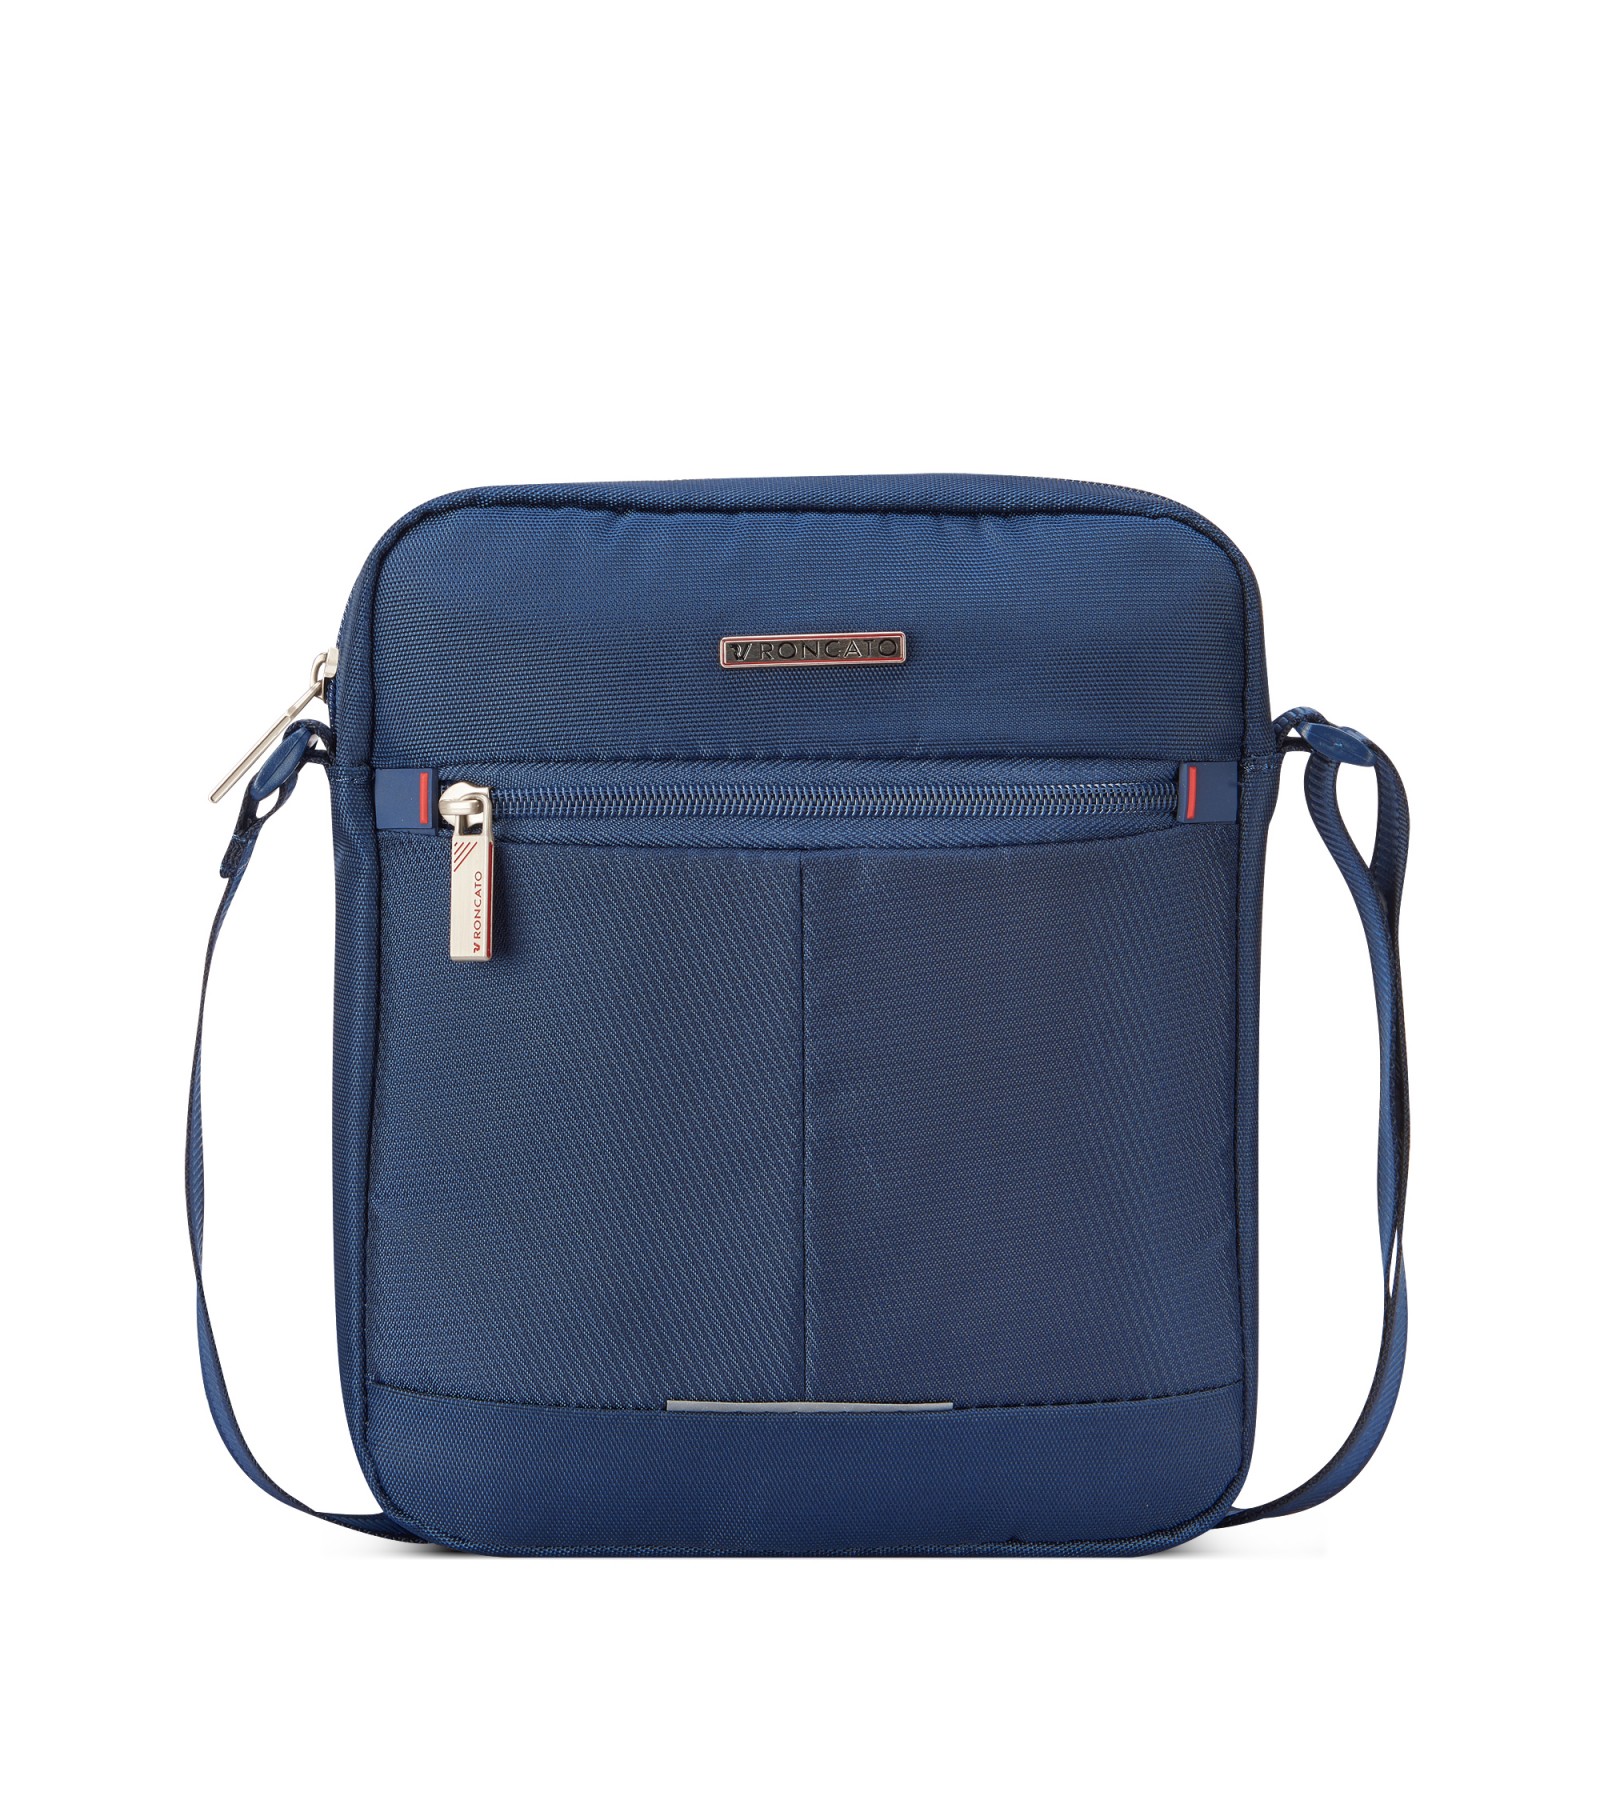 Blasco&Vila Gens, the new original and stackable handbag holder -  Blasco&Vila -